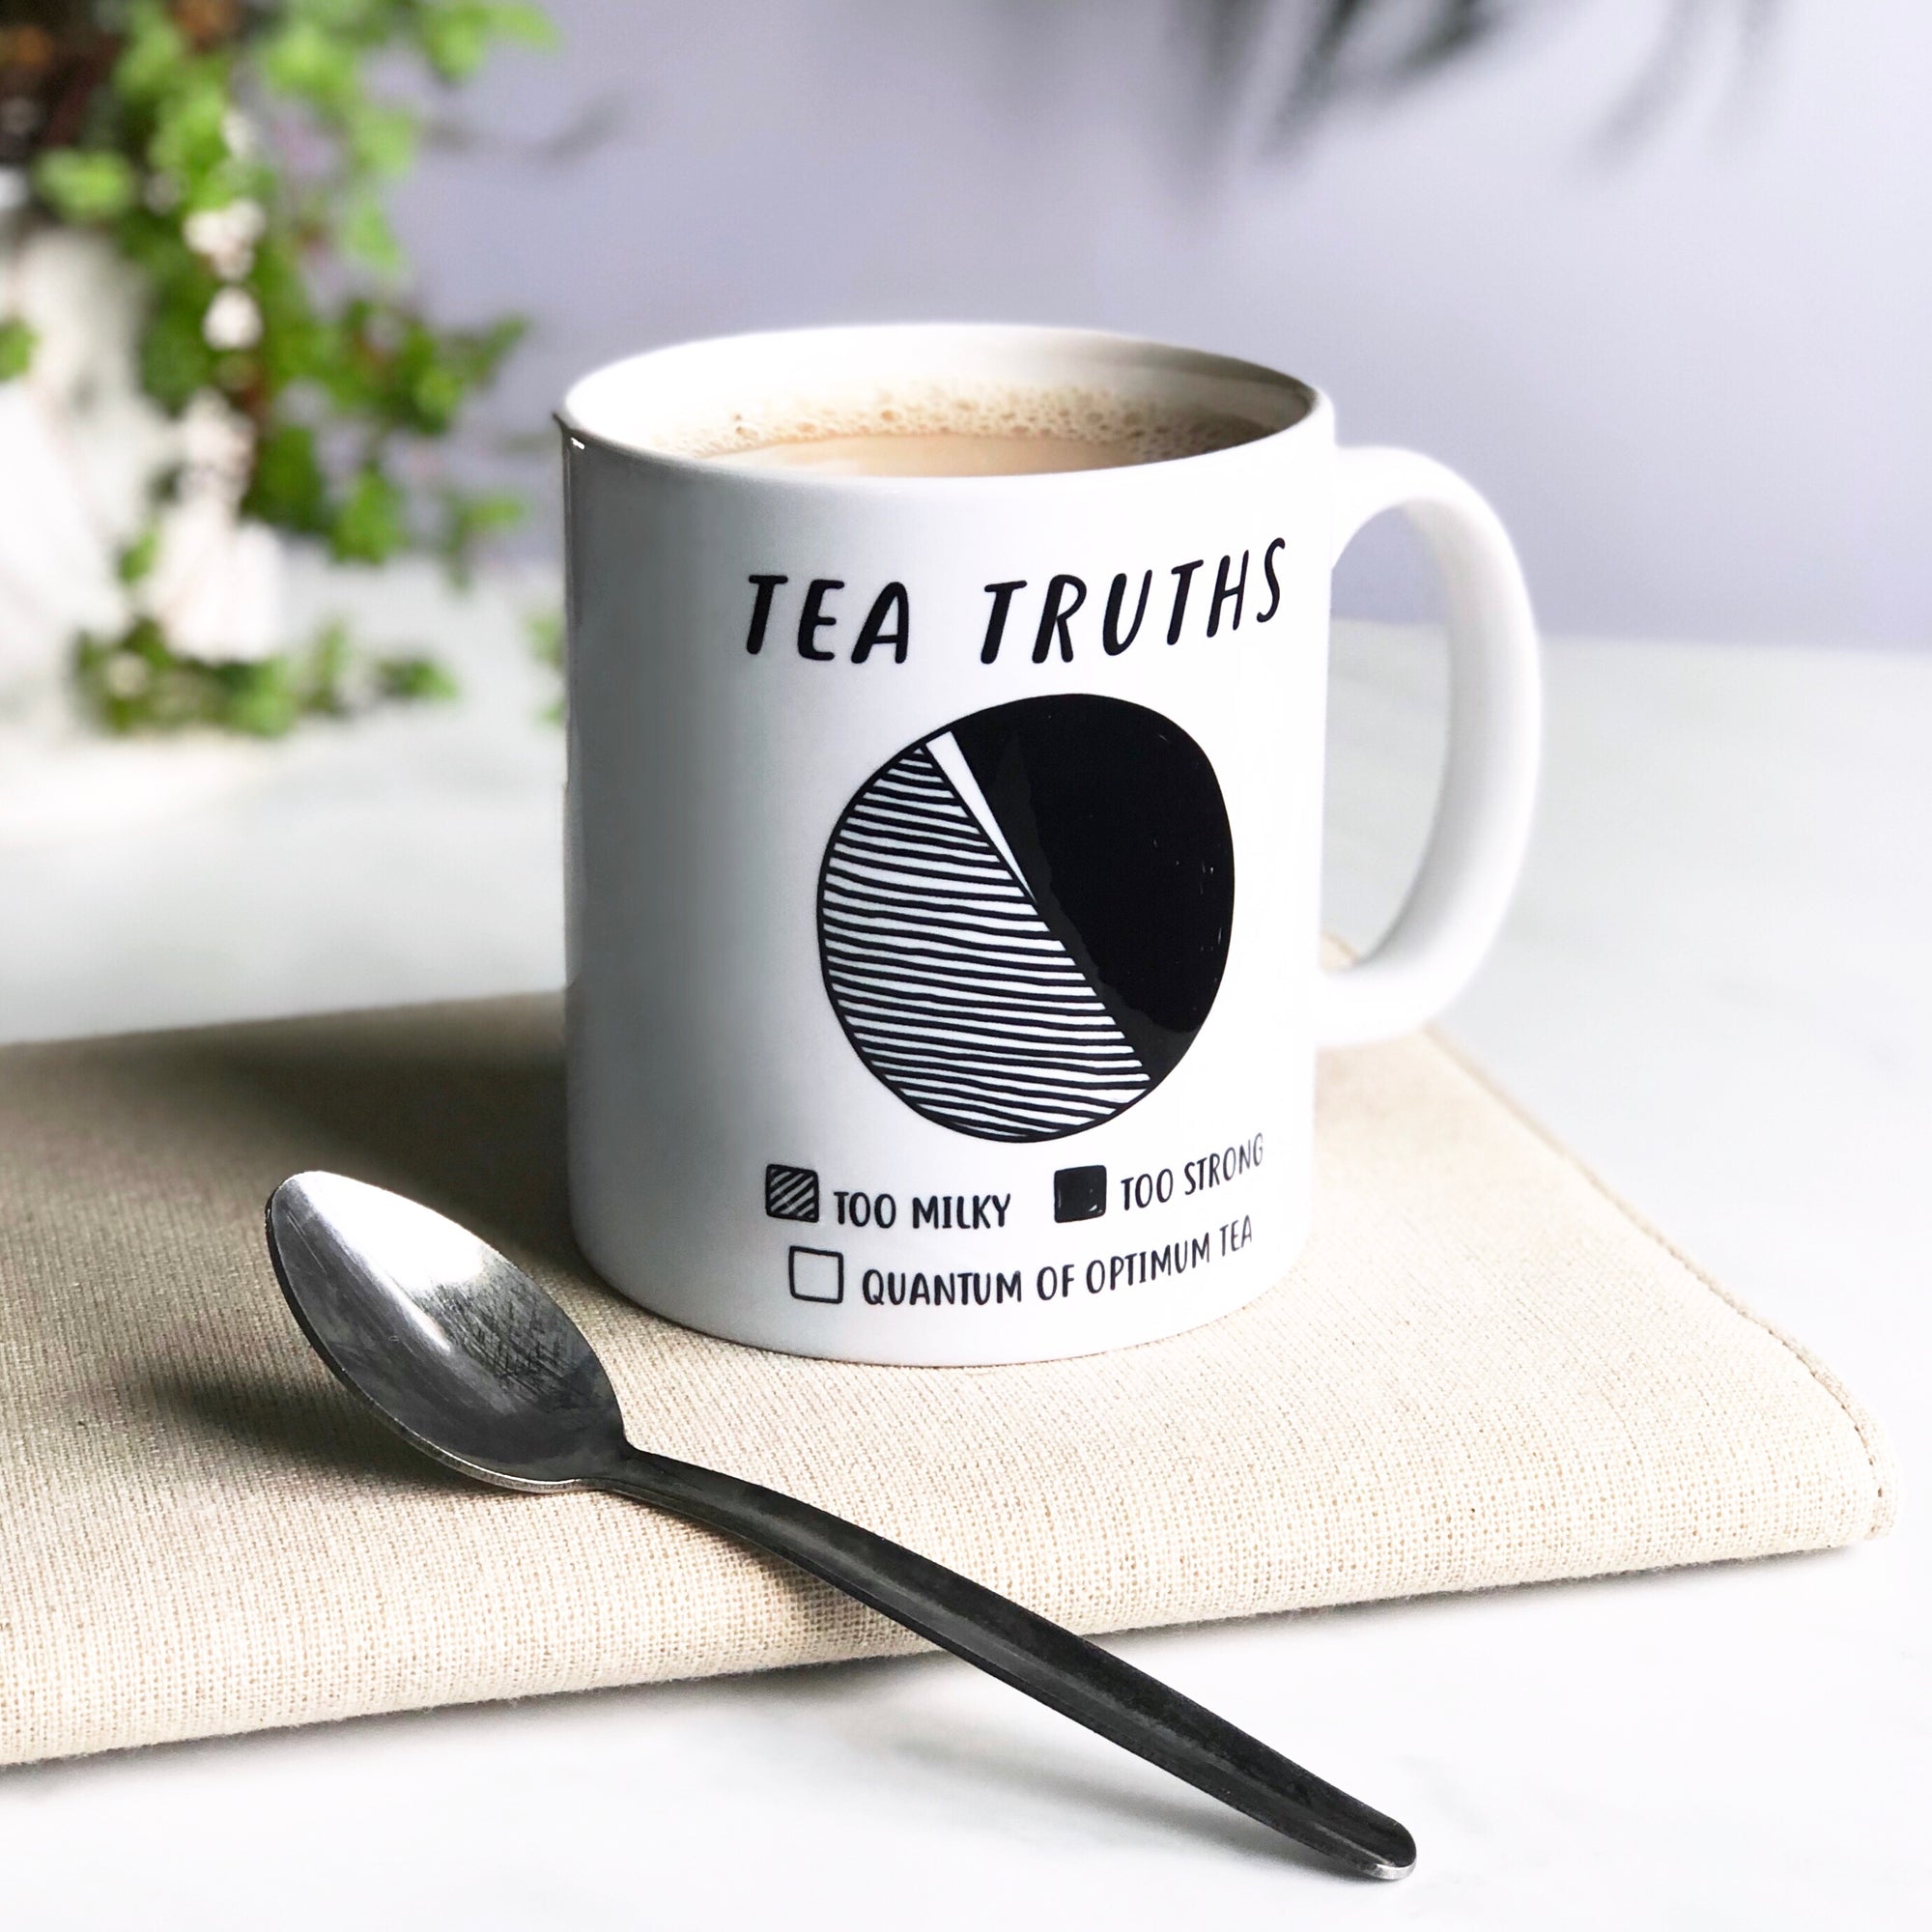 tea truths mug